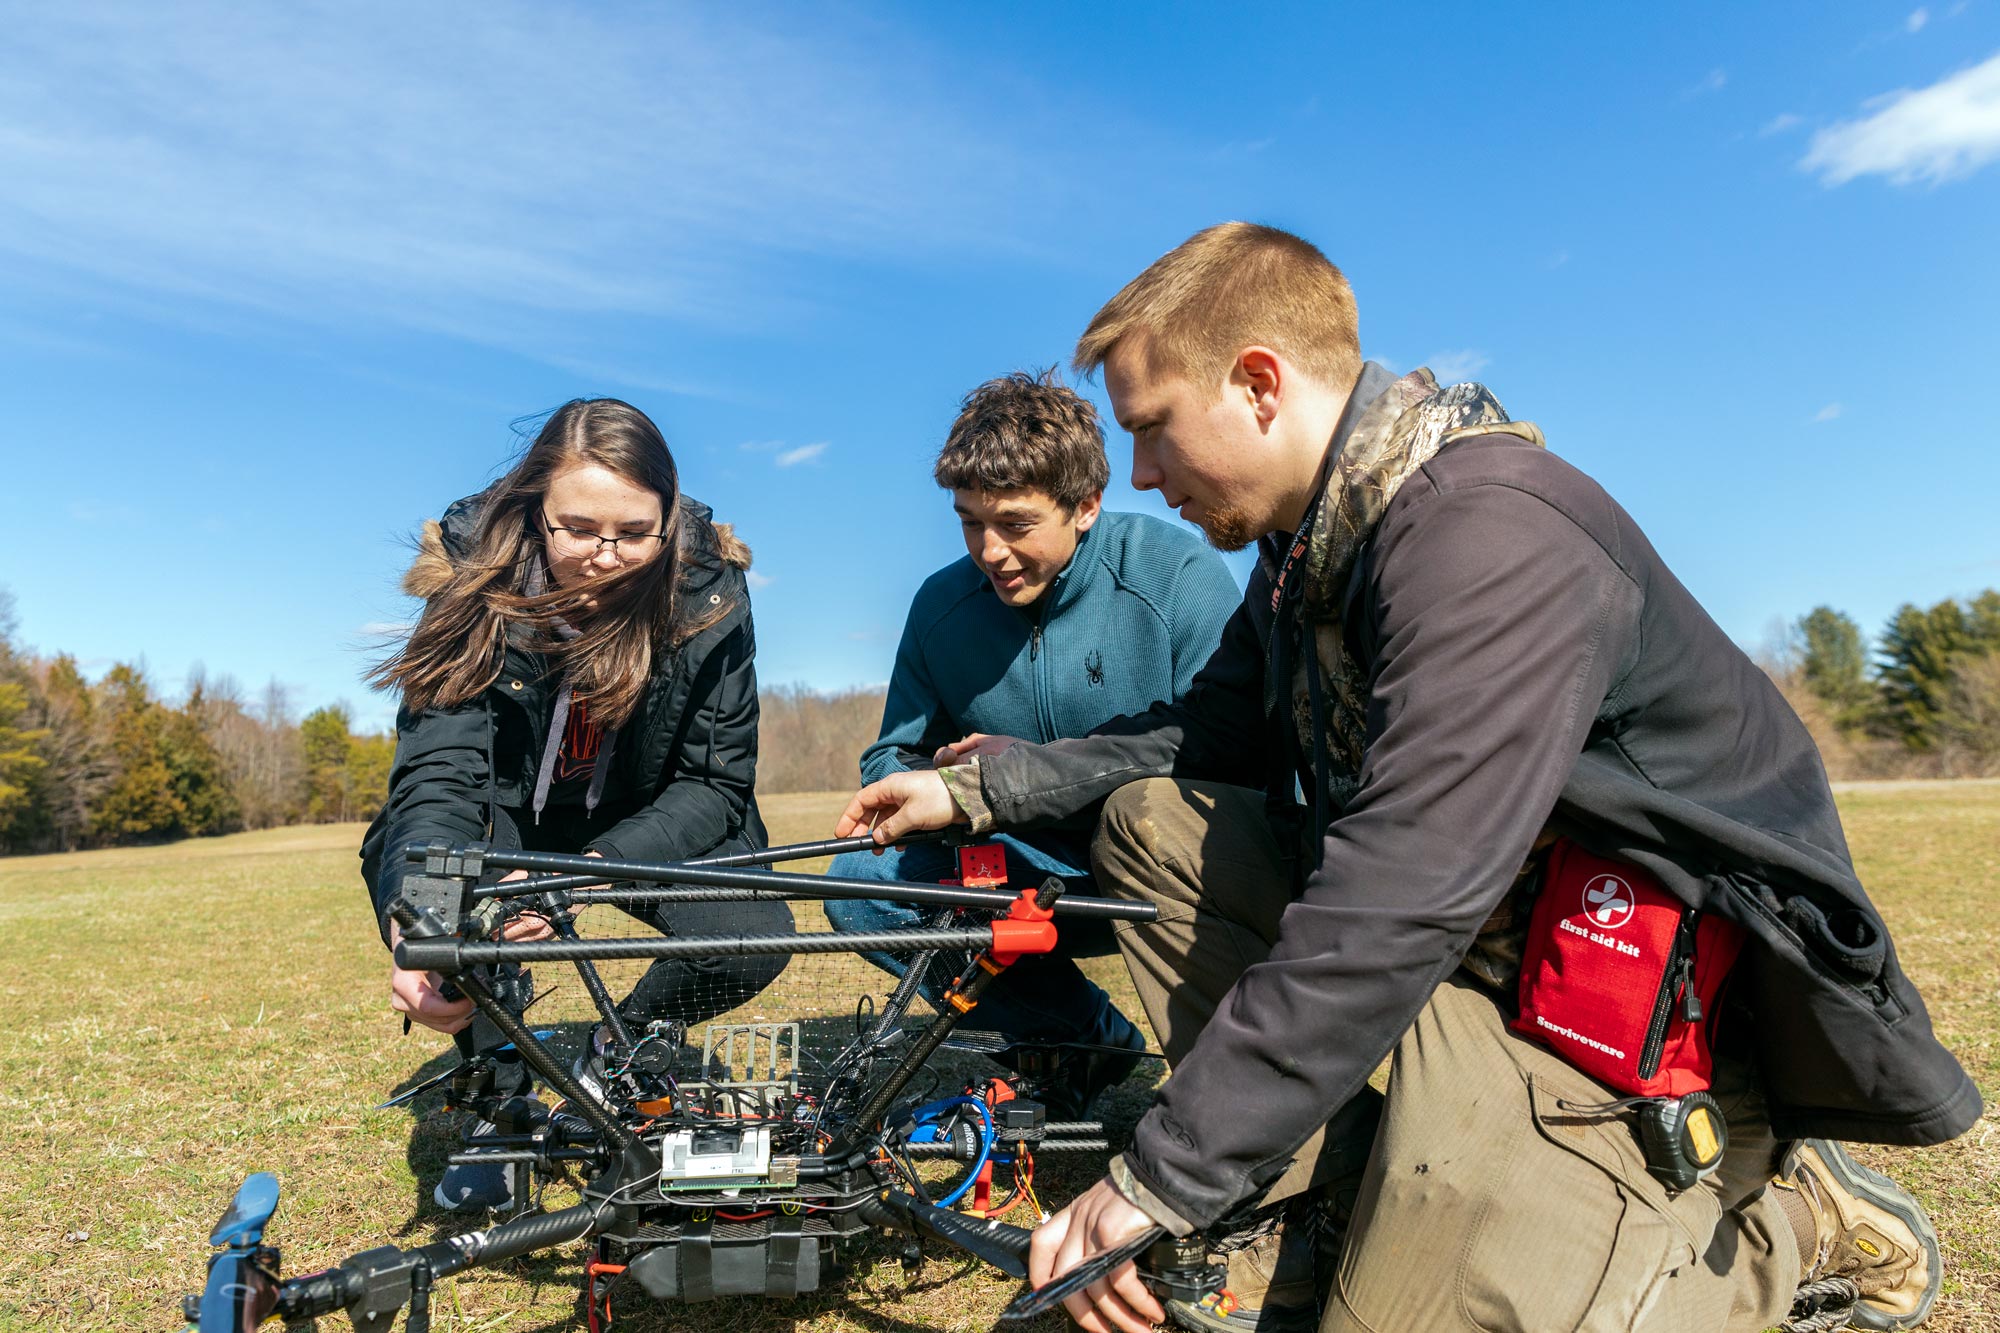 Students from the autonomous robotics team test an aerial drone on UVA’s Milton Field 